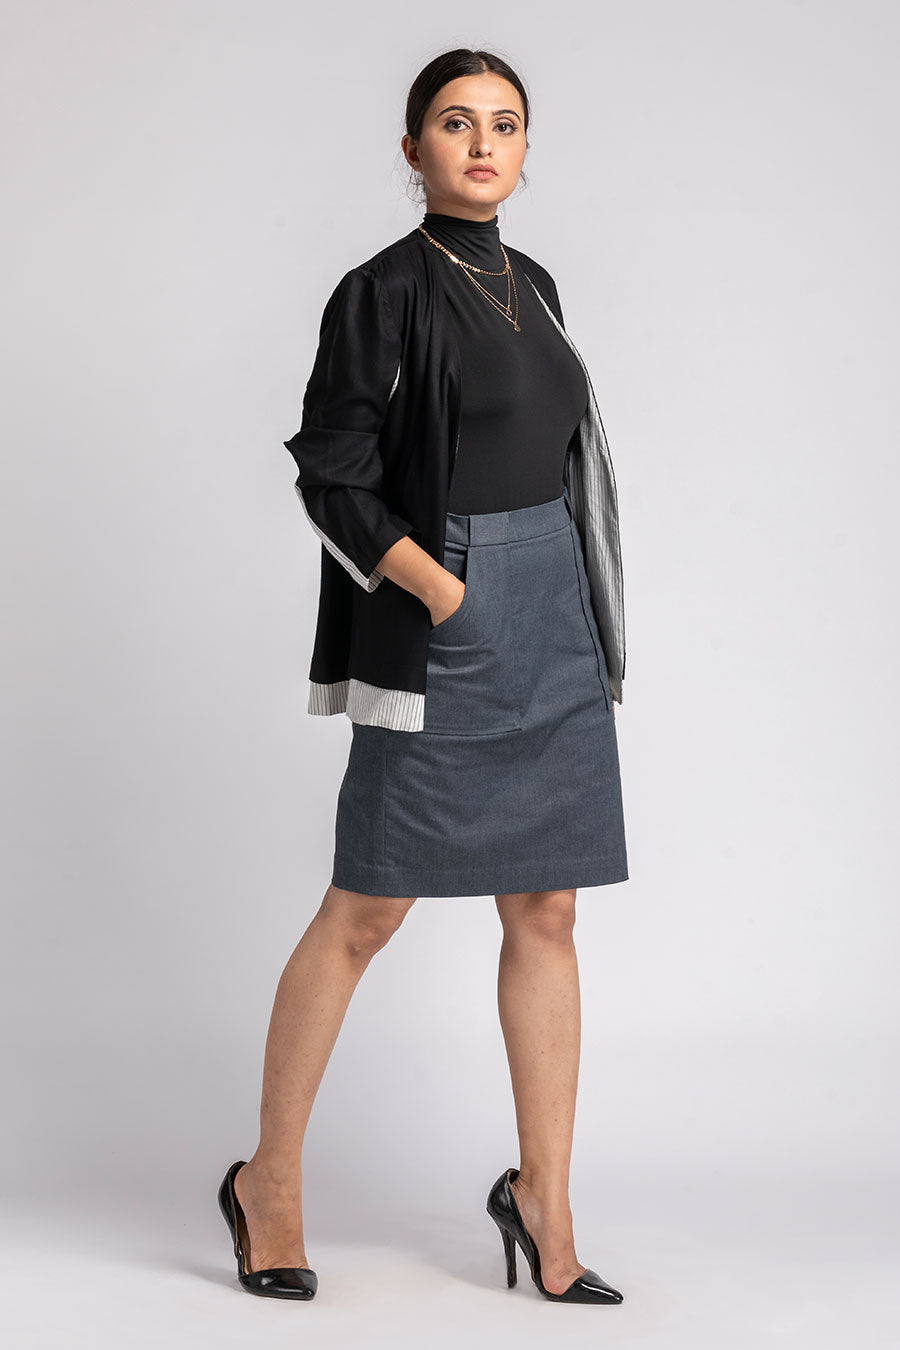 Affinity Grey Cotton Lycra Skirt